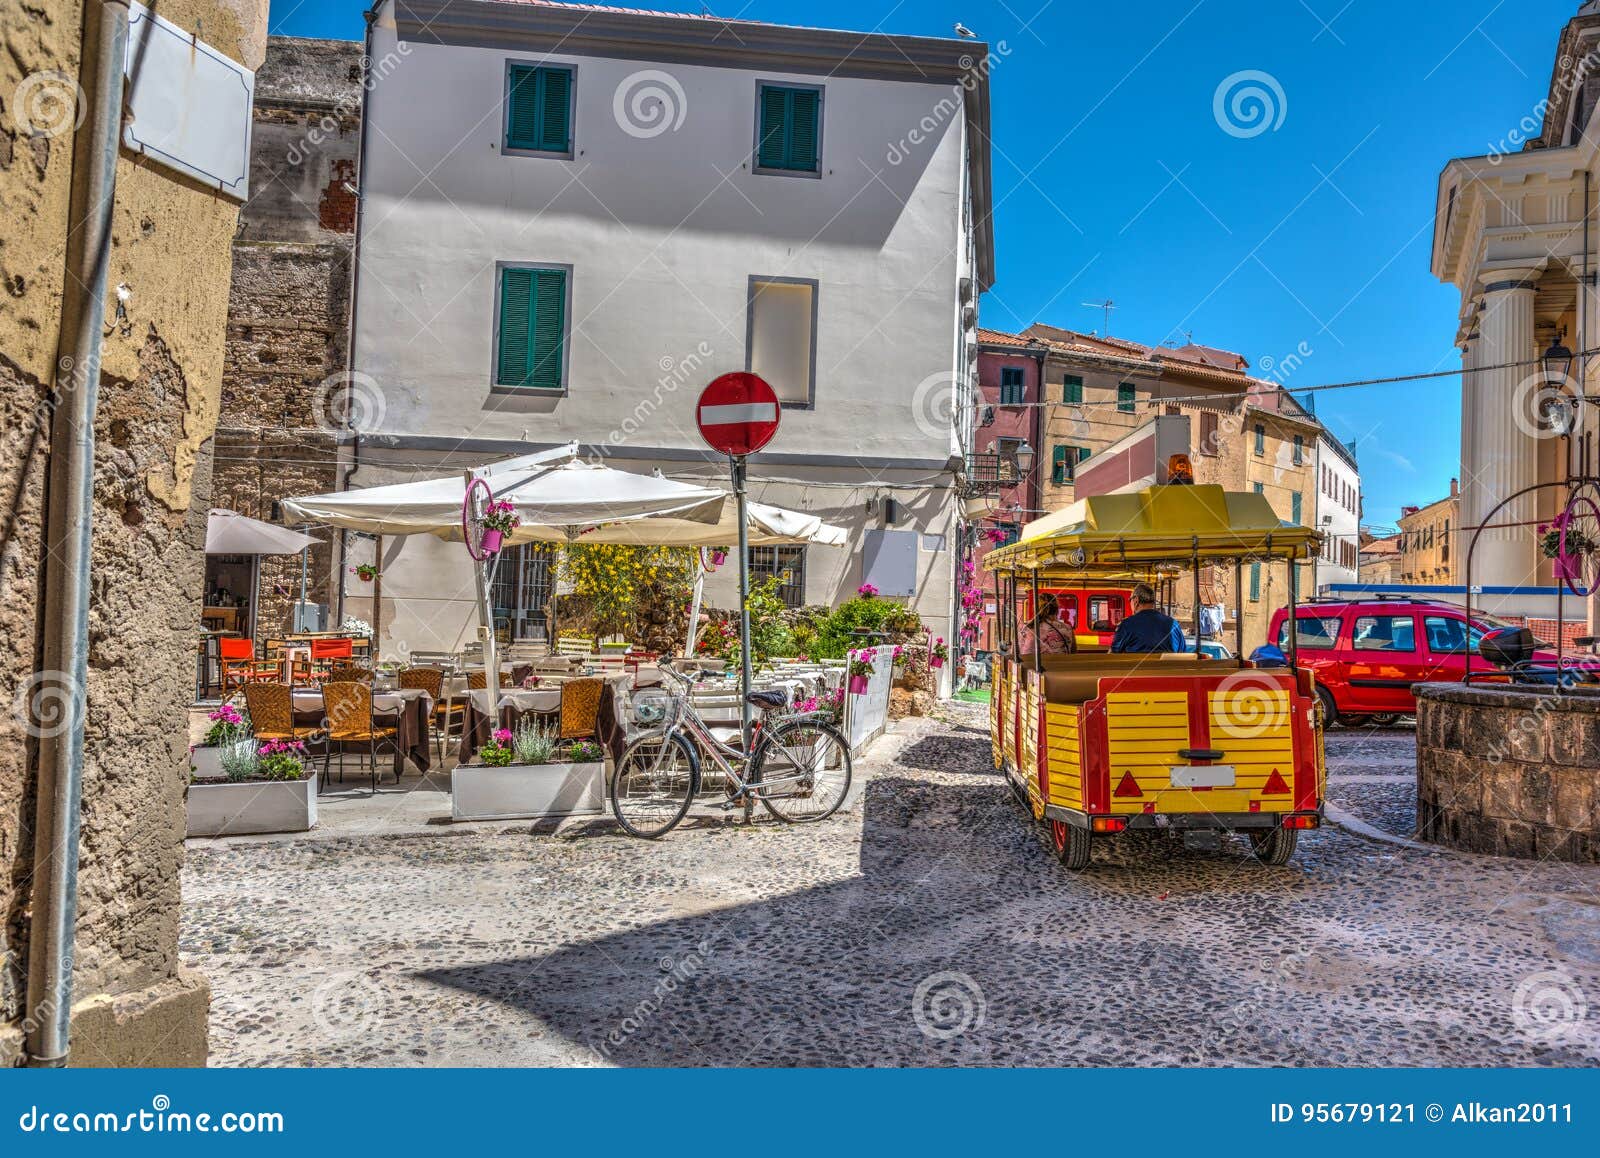 small square in alghero old town